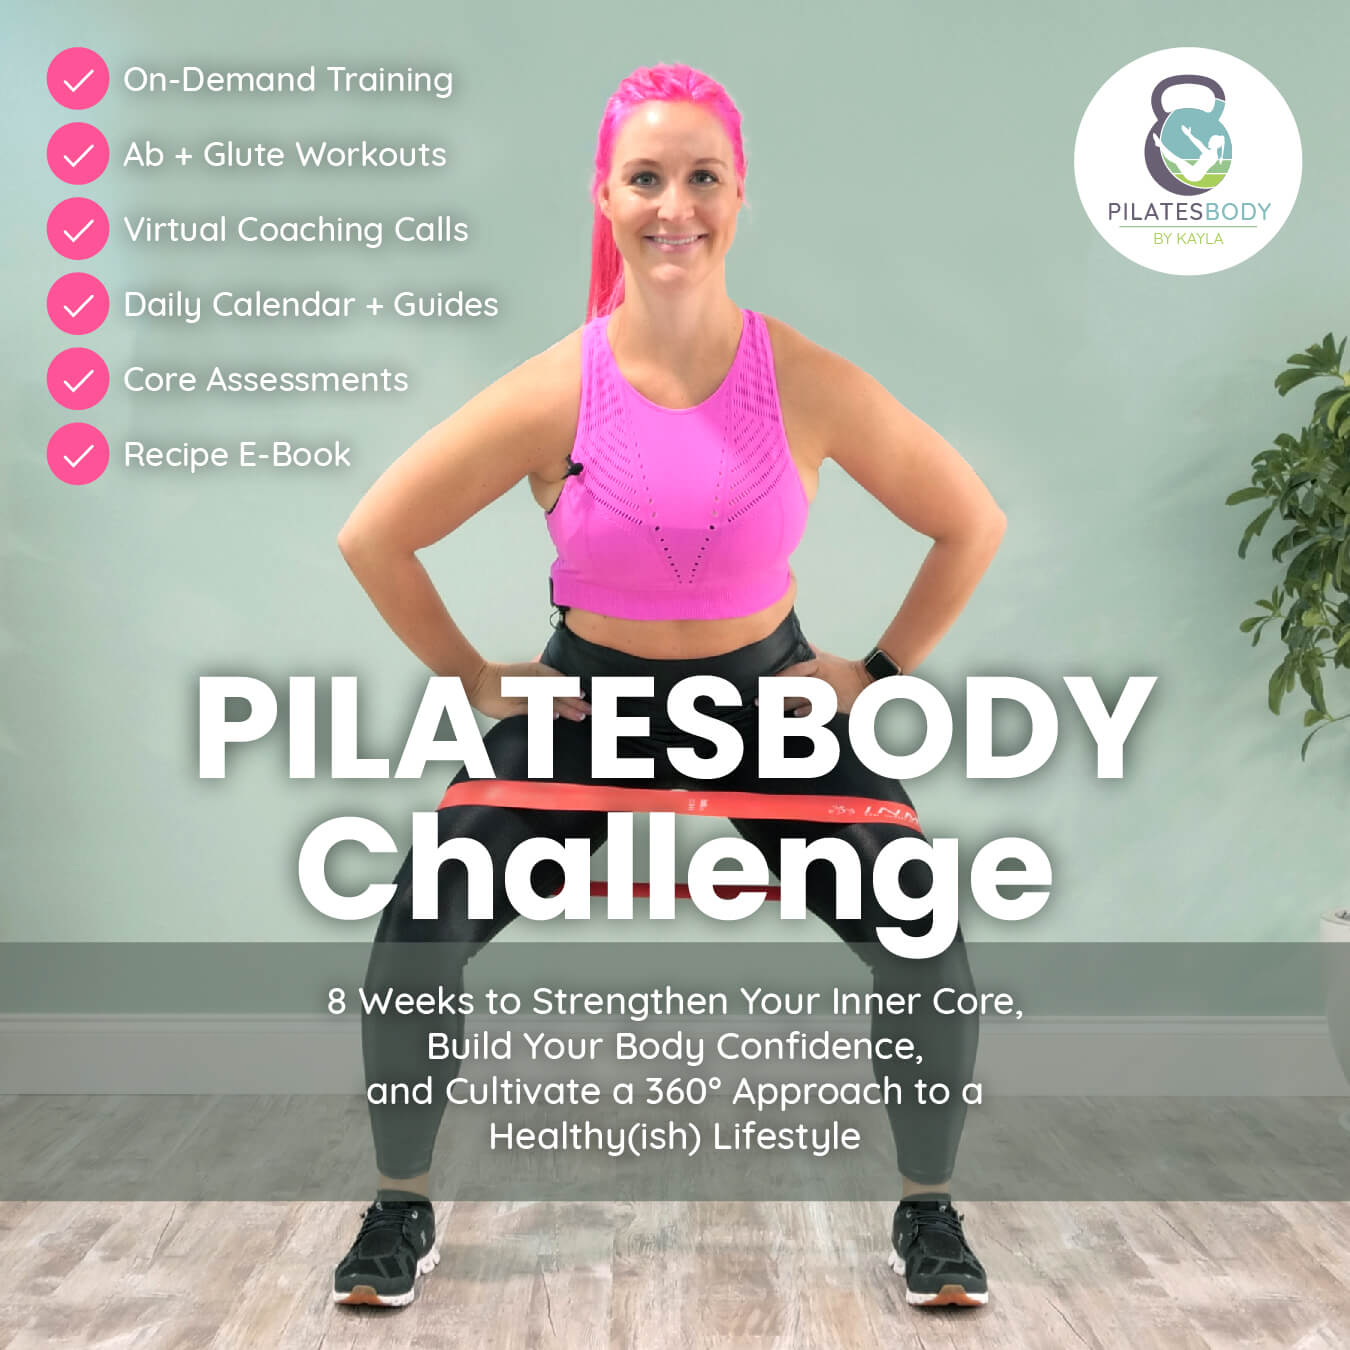 PILATES-BODY-Challenge-PILATESBODY-by-Kayla-8-week-on-demand-pilates-program-long-lake-minnesota-minneapolis